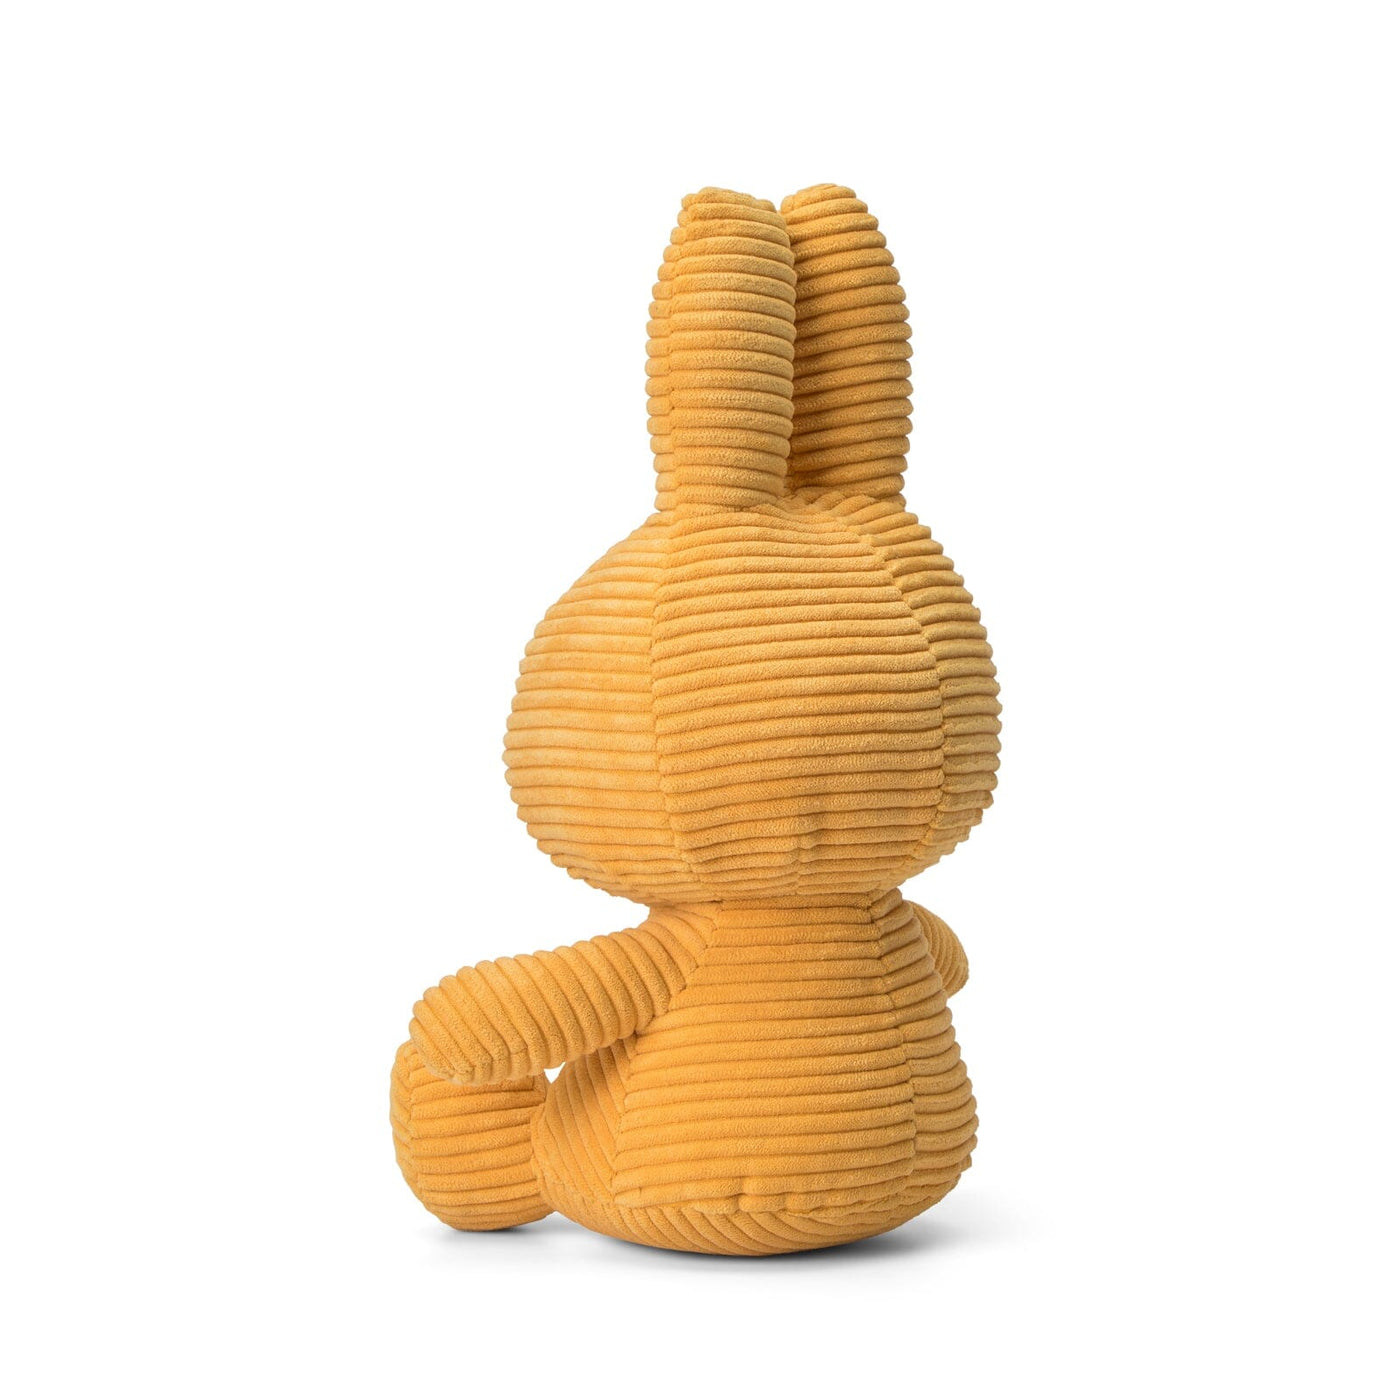 Miffy Sitting Corduroy Yellow - 33cm Soft Toy Miffy 